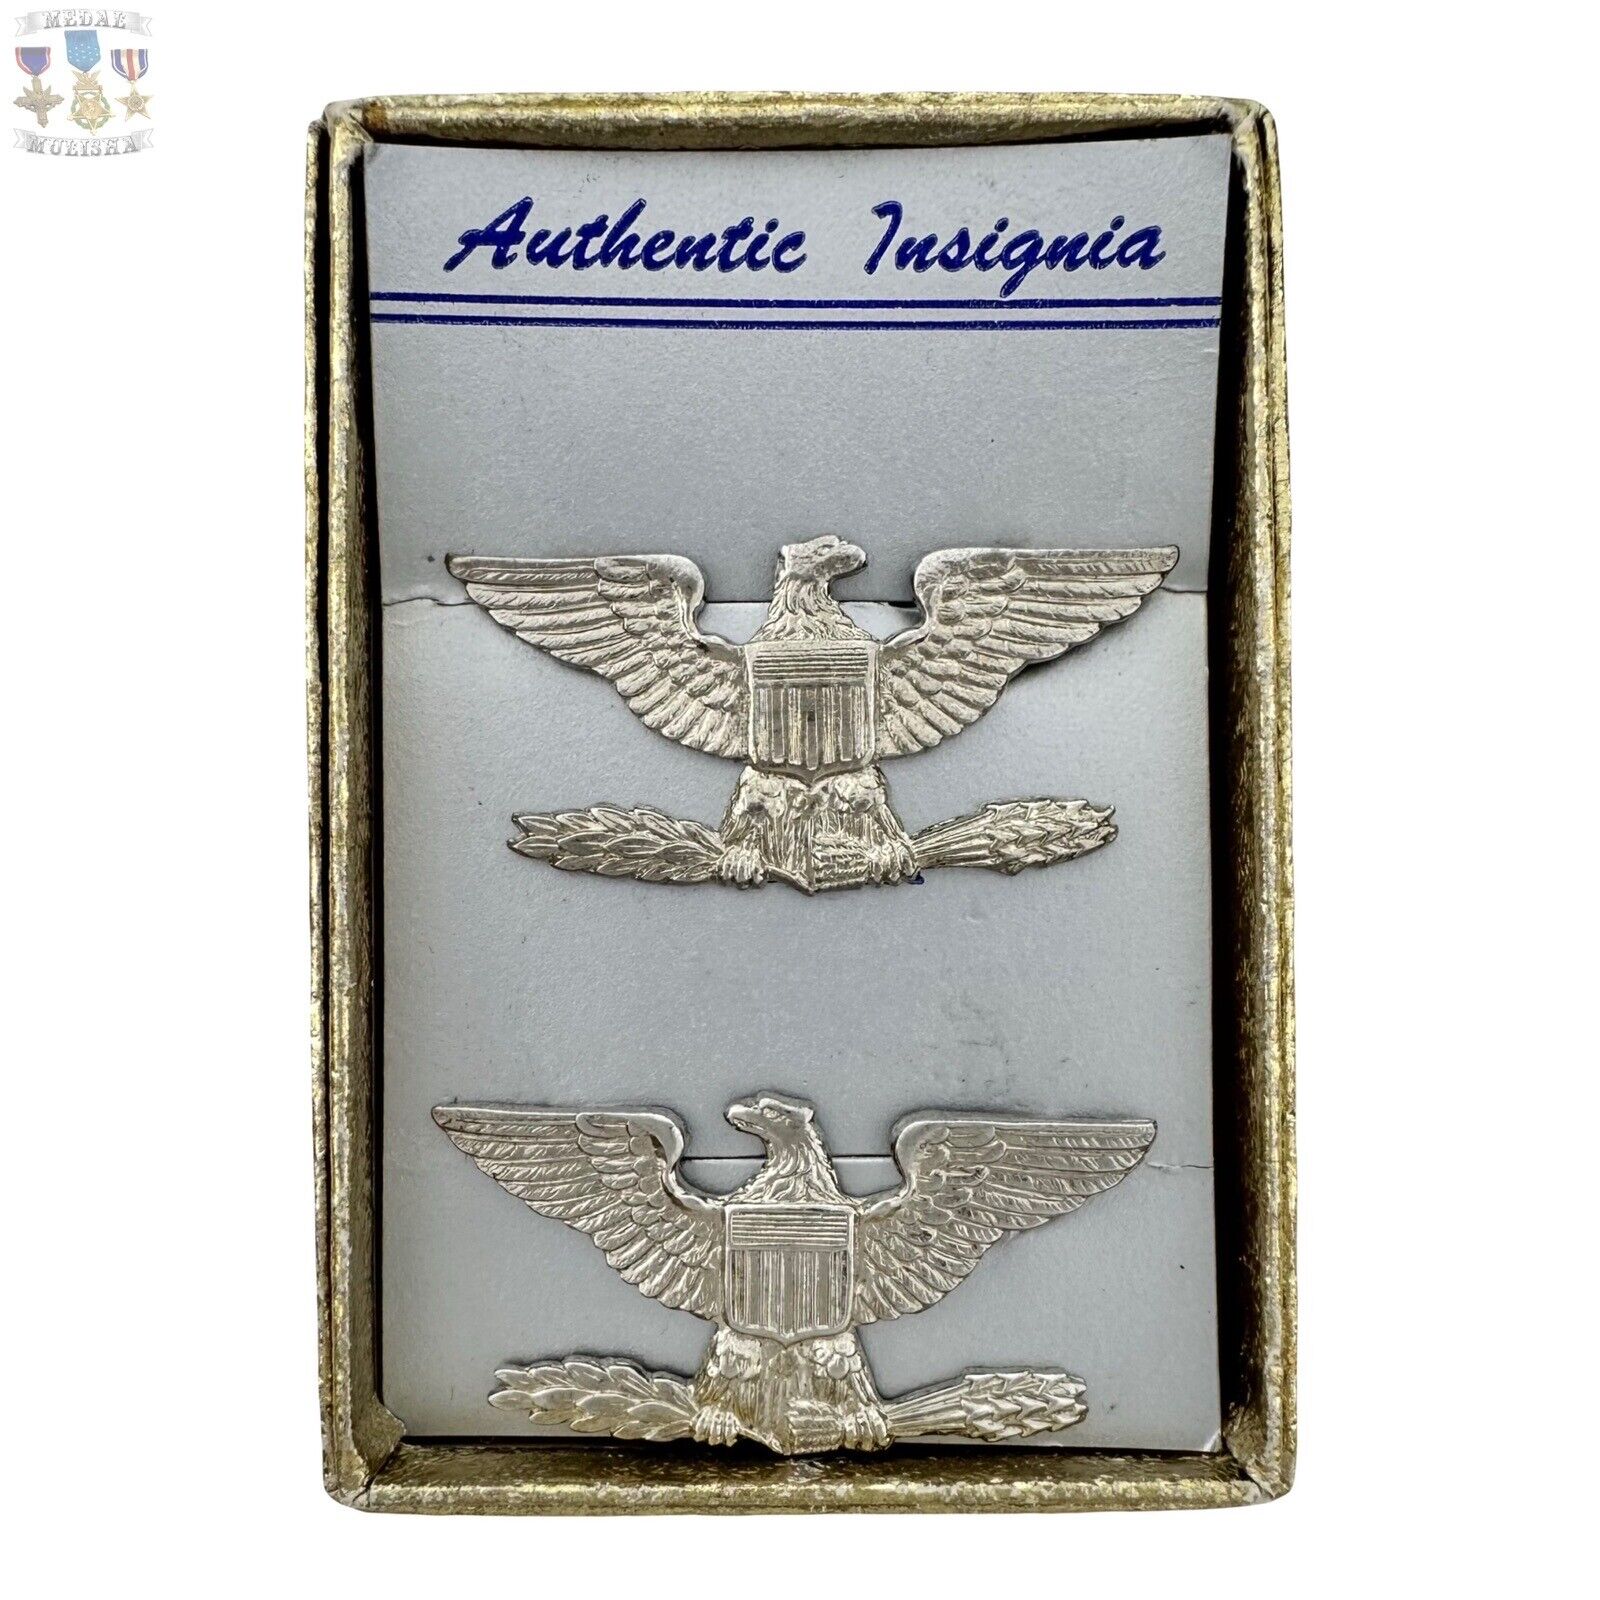 WWII ARMY USMC COLONEL NAVY CAPTAIN INSIGNIA 🦅 EAGLE ACID TEST CARD BOX WW2